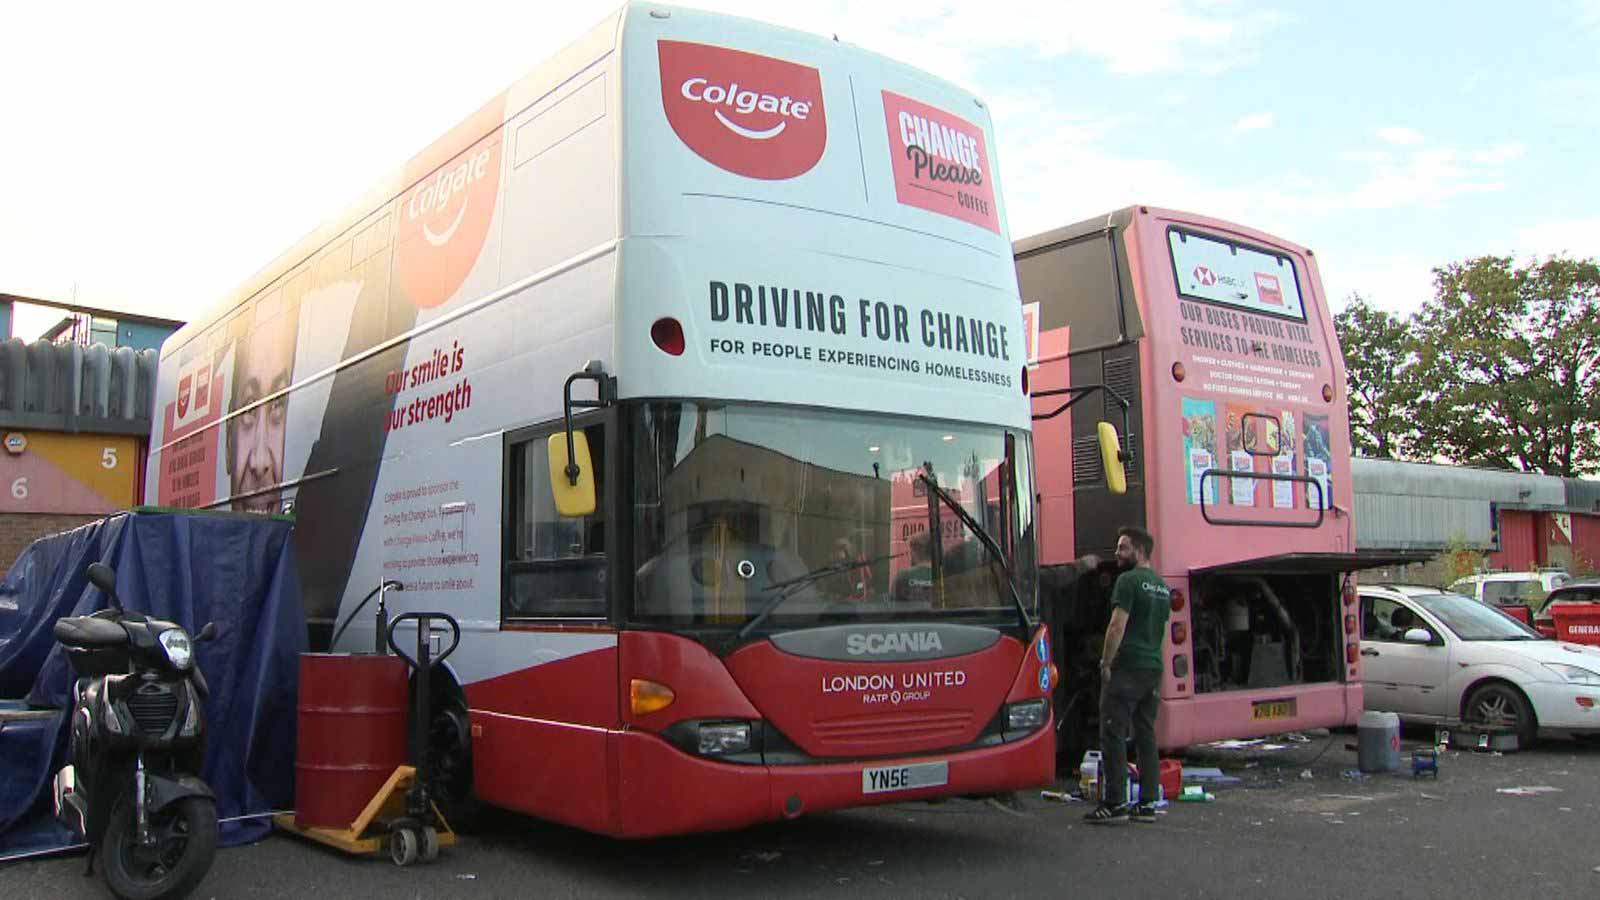 London buses renovated to provide dental care for homeless